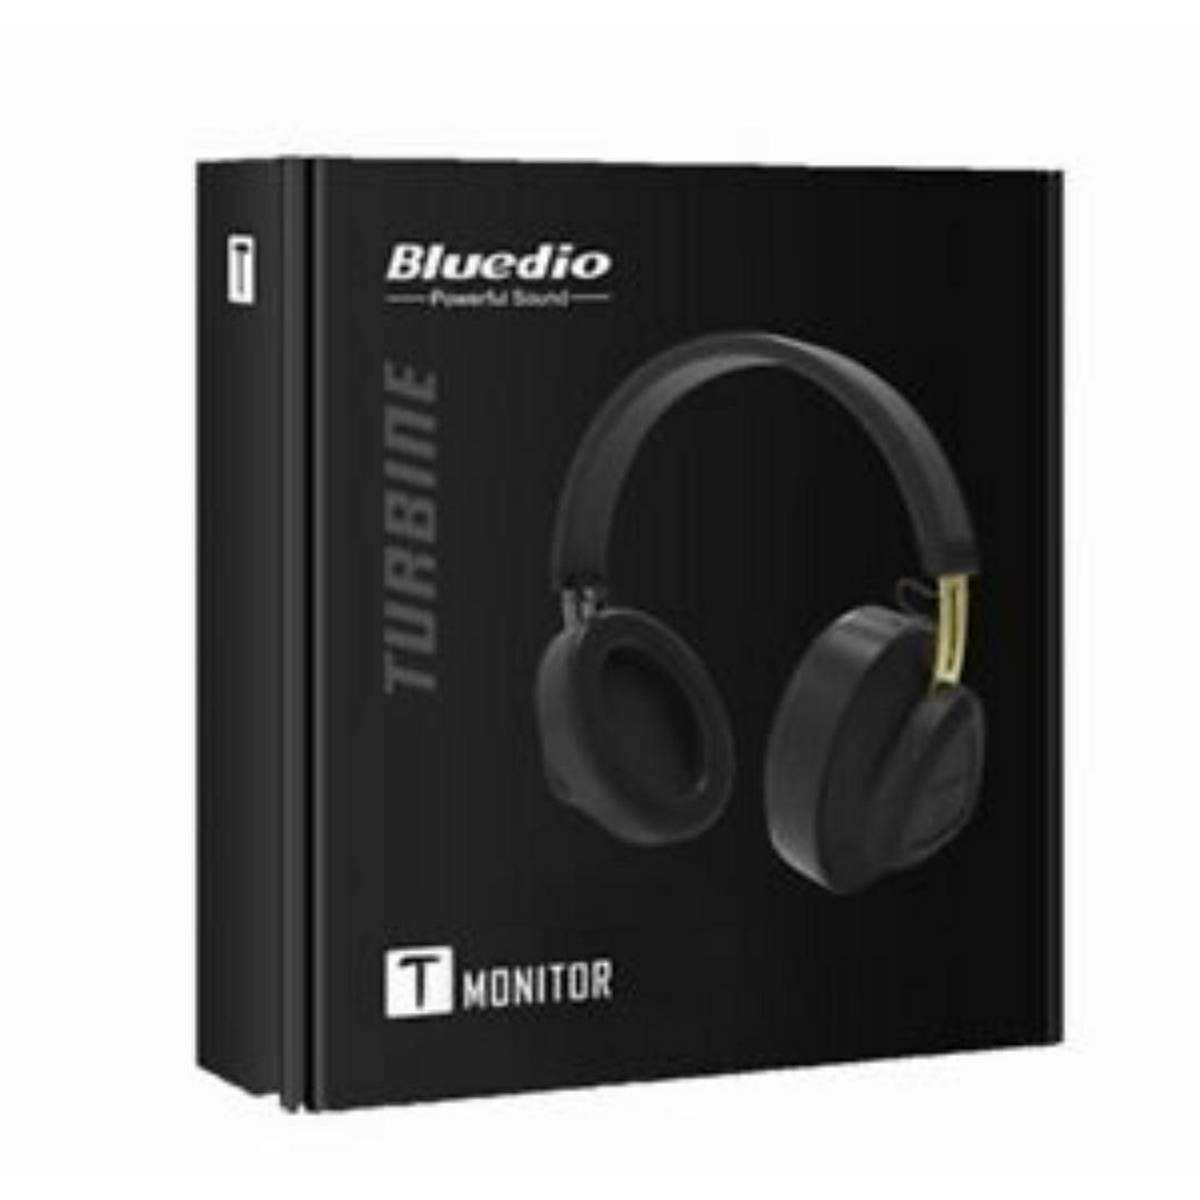 Bluedio Bluetooth Headset Tmonitor Over The Ear